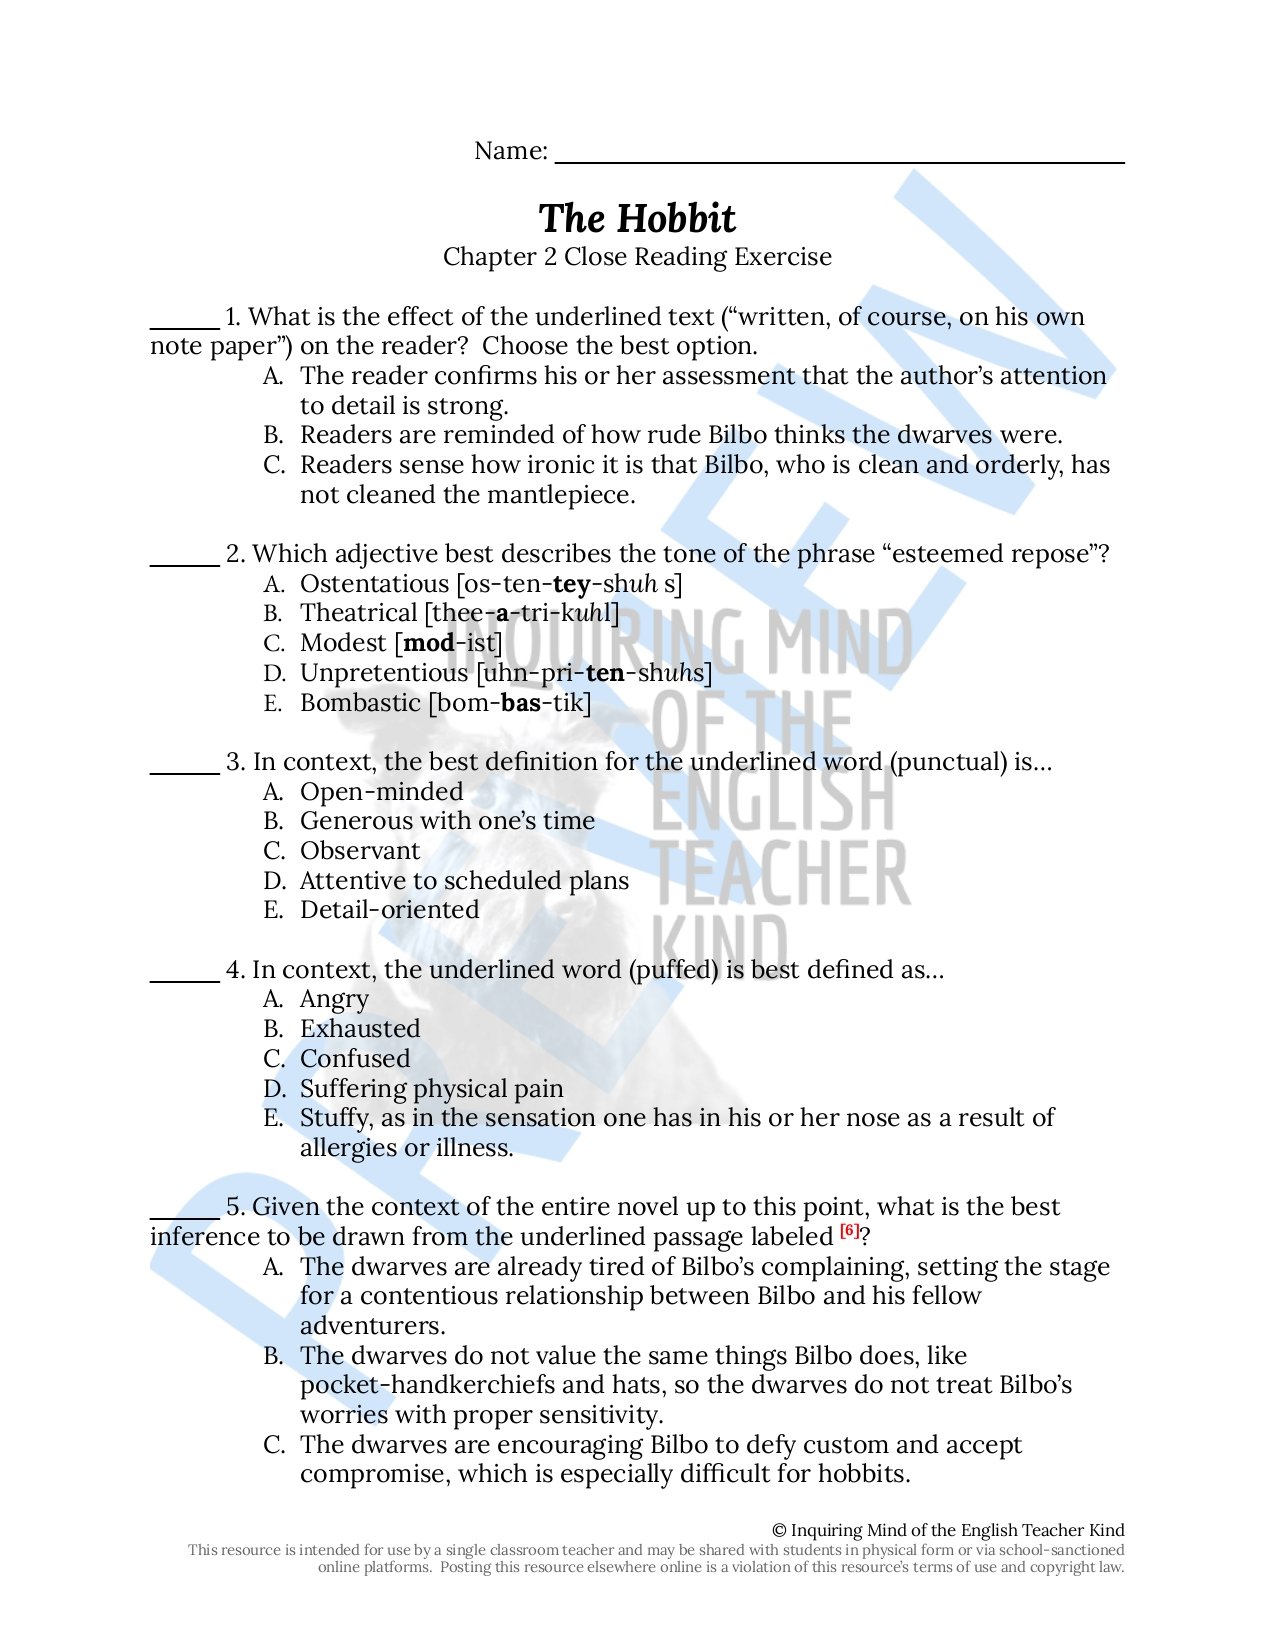 Hobbit Worksheet From Inquiring Mind From English Teacher Kind